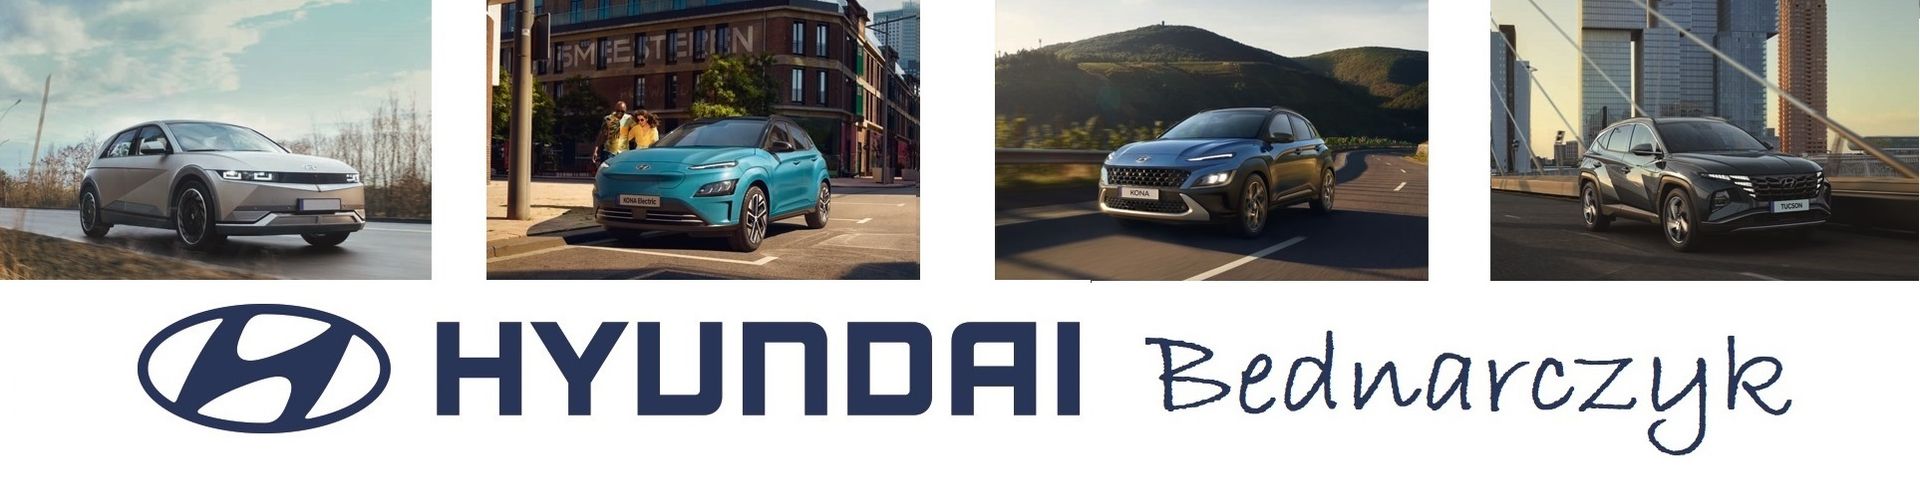 Hyundai - Bednarczyk top banner